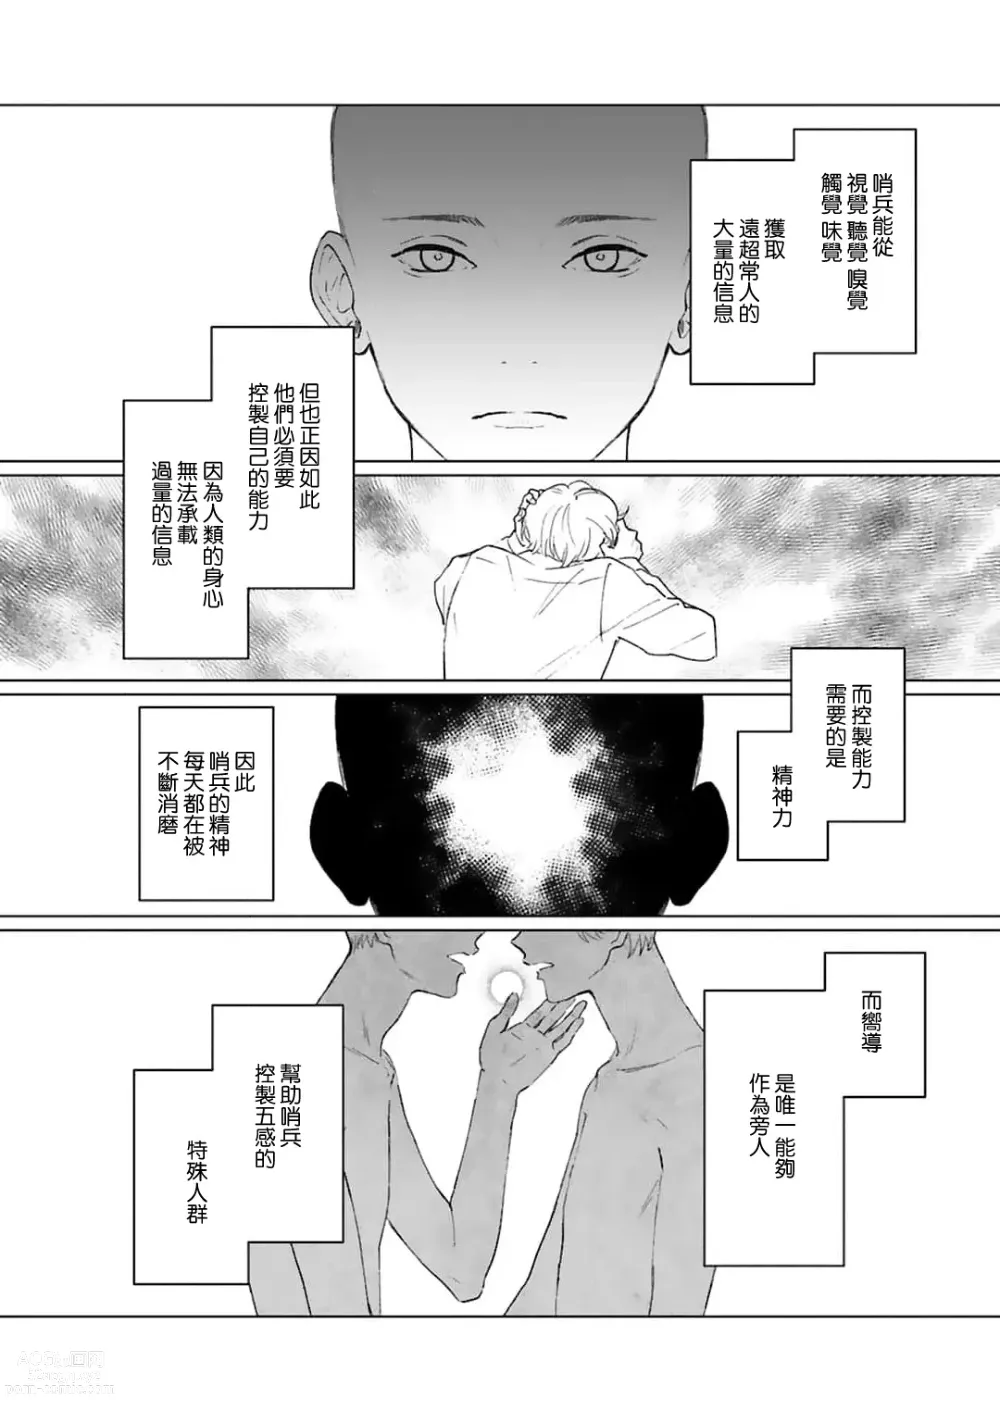 Page 26 of manga 和你醉生梦死在伊甸园的黎明时分 act.1-5 end